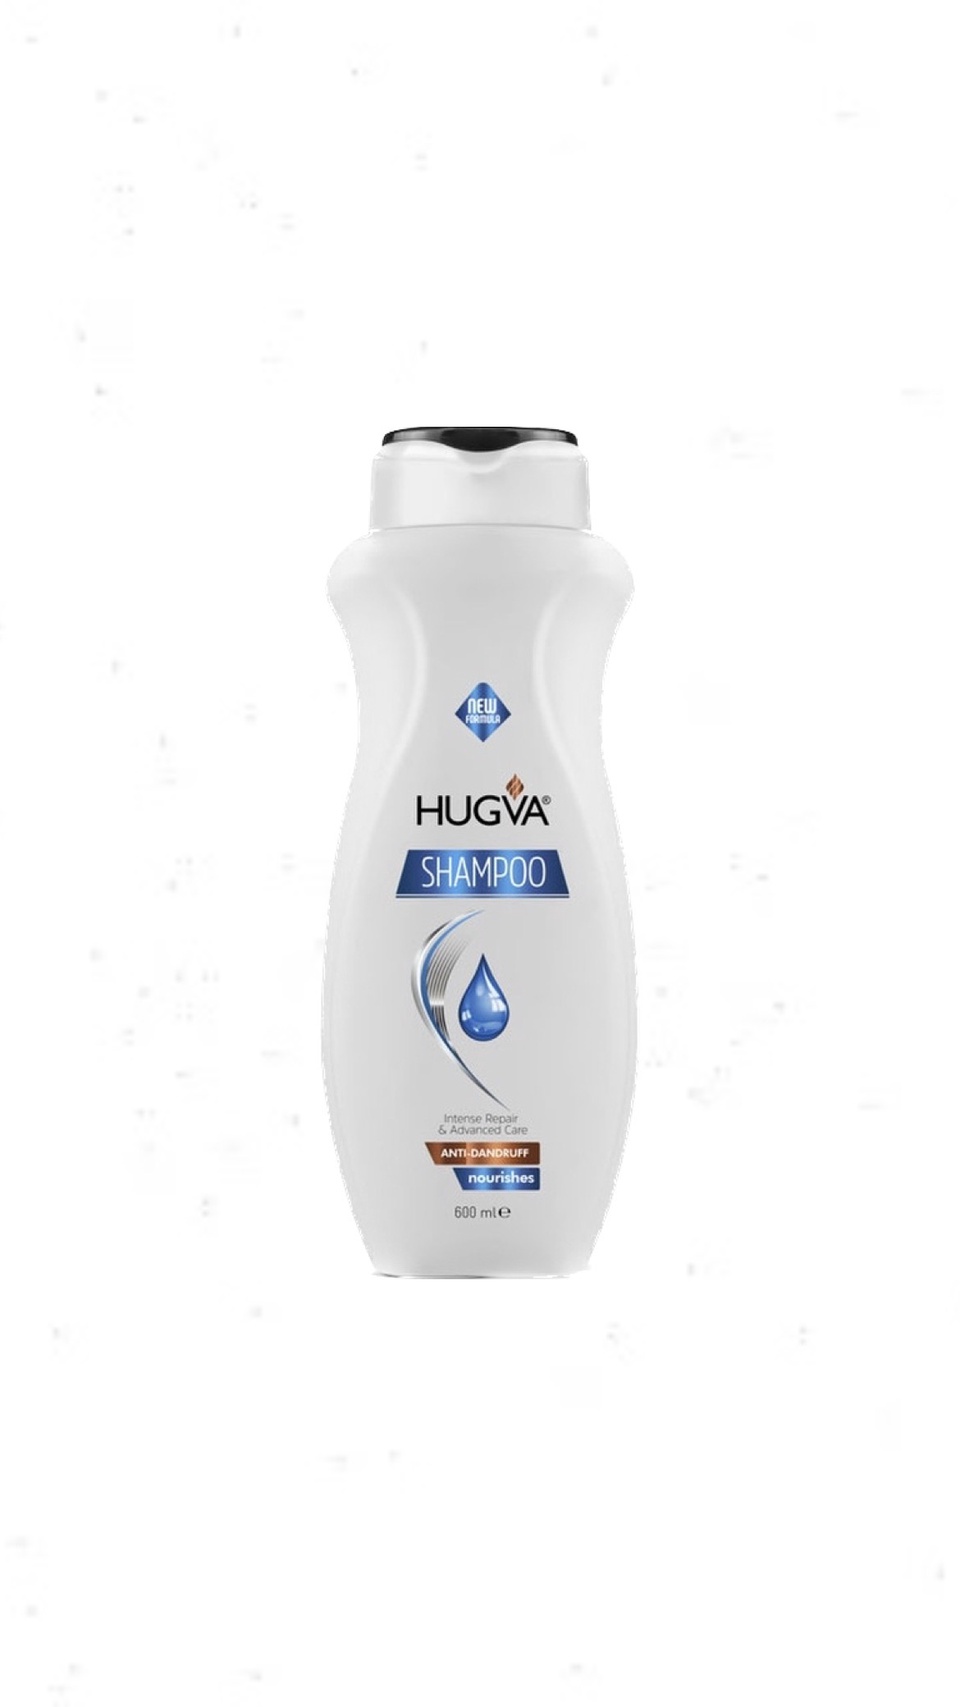 Очищающий шампунь для волос от перхоти Hugva 600 мл - 300 ₽, заказать онлайн.